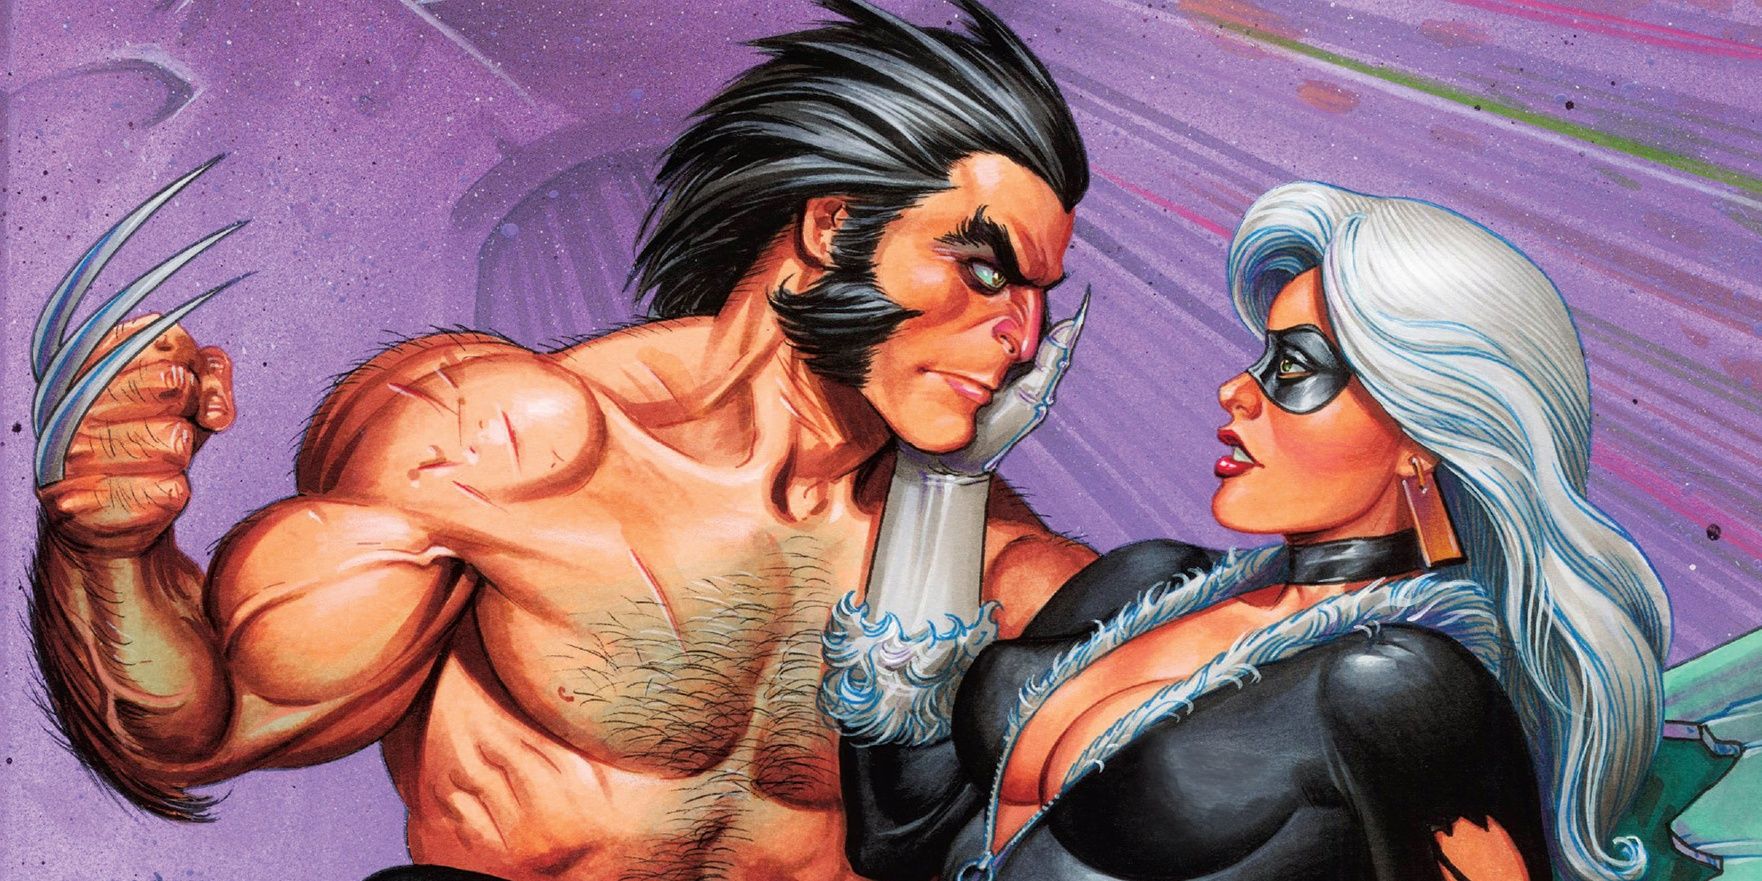 Wolverine &amp; Black Cat - Claws looking intimate.jpg